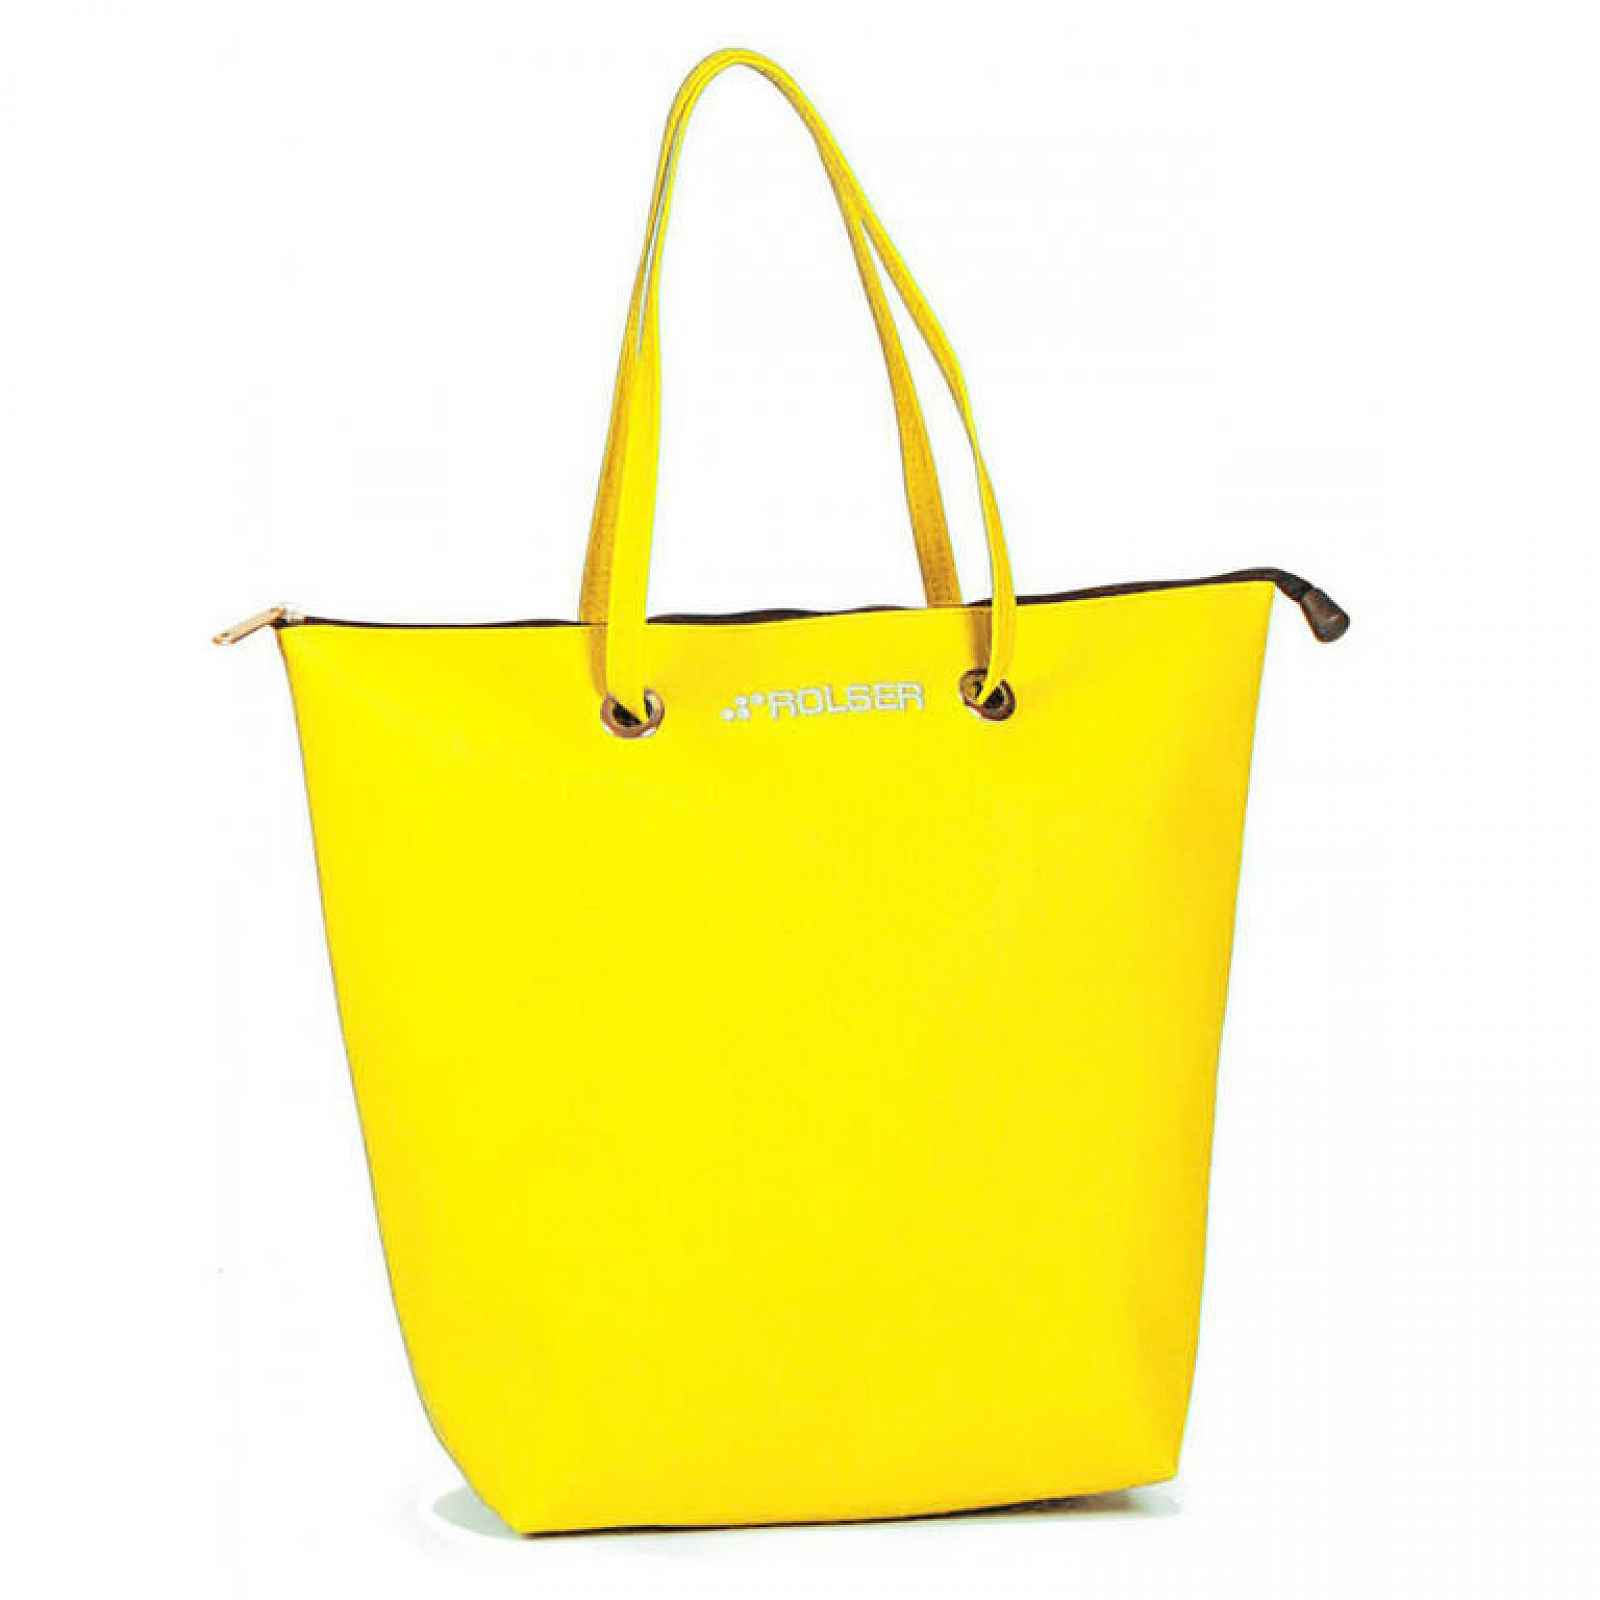 Nákupní taška Bag S Bag žlutá